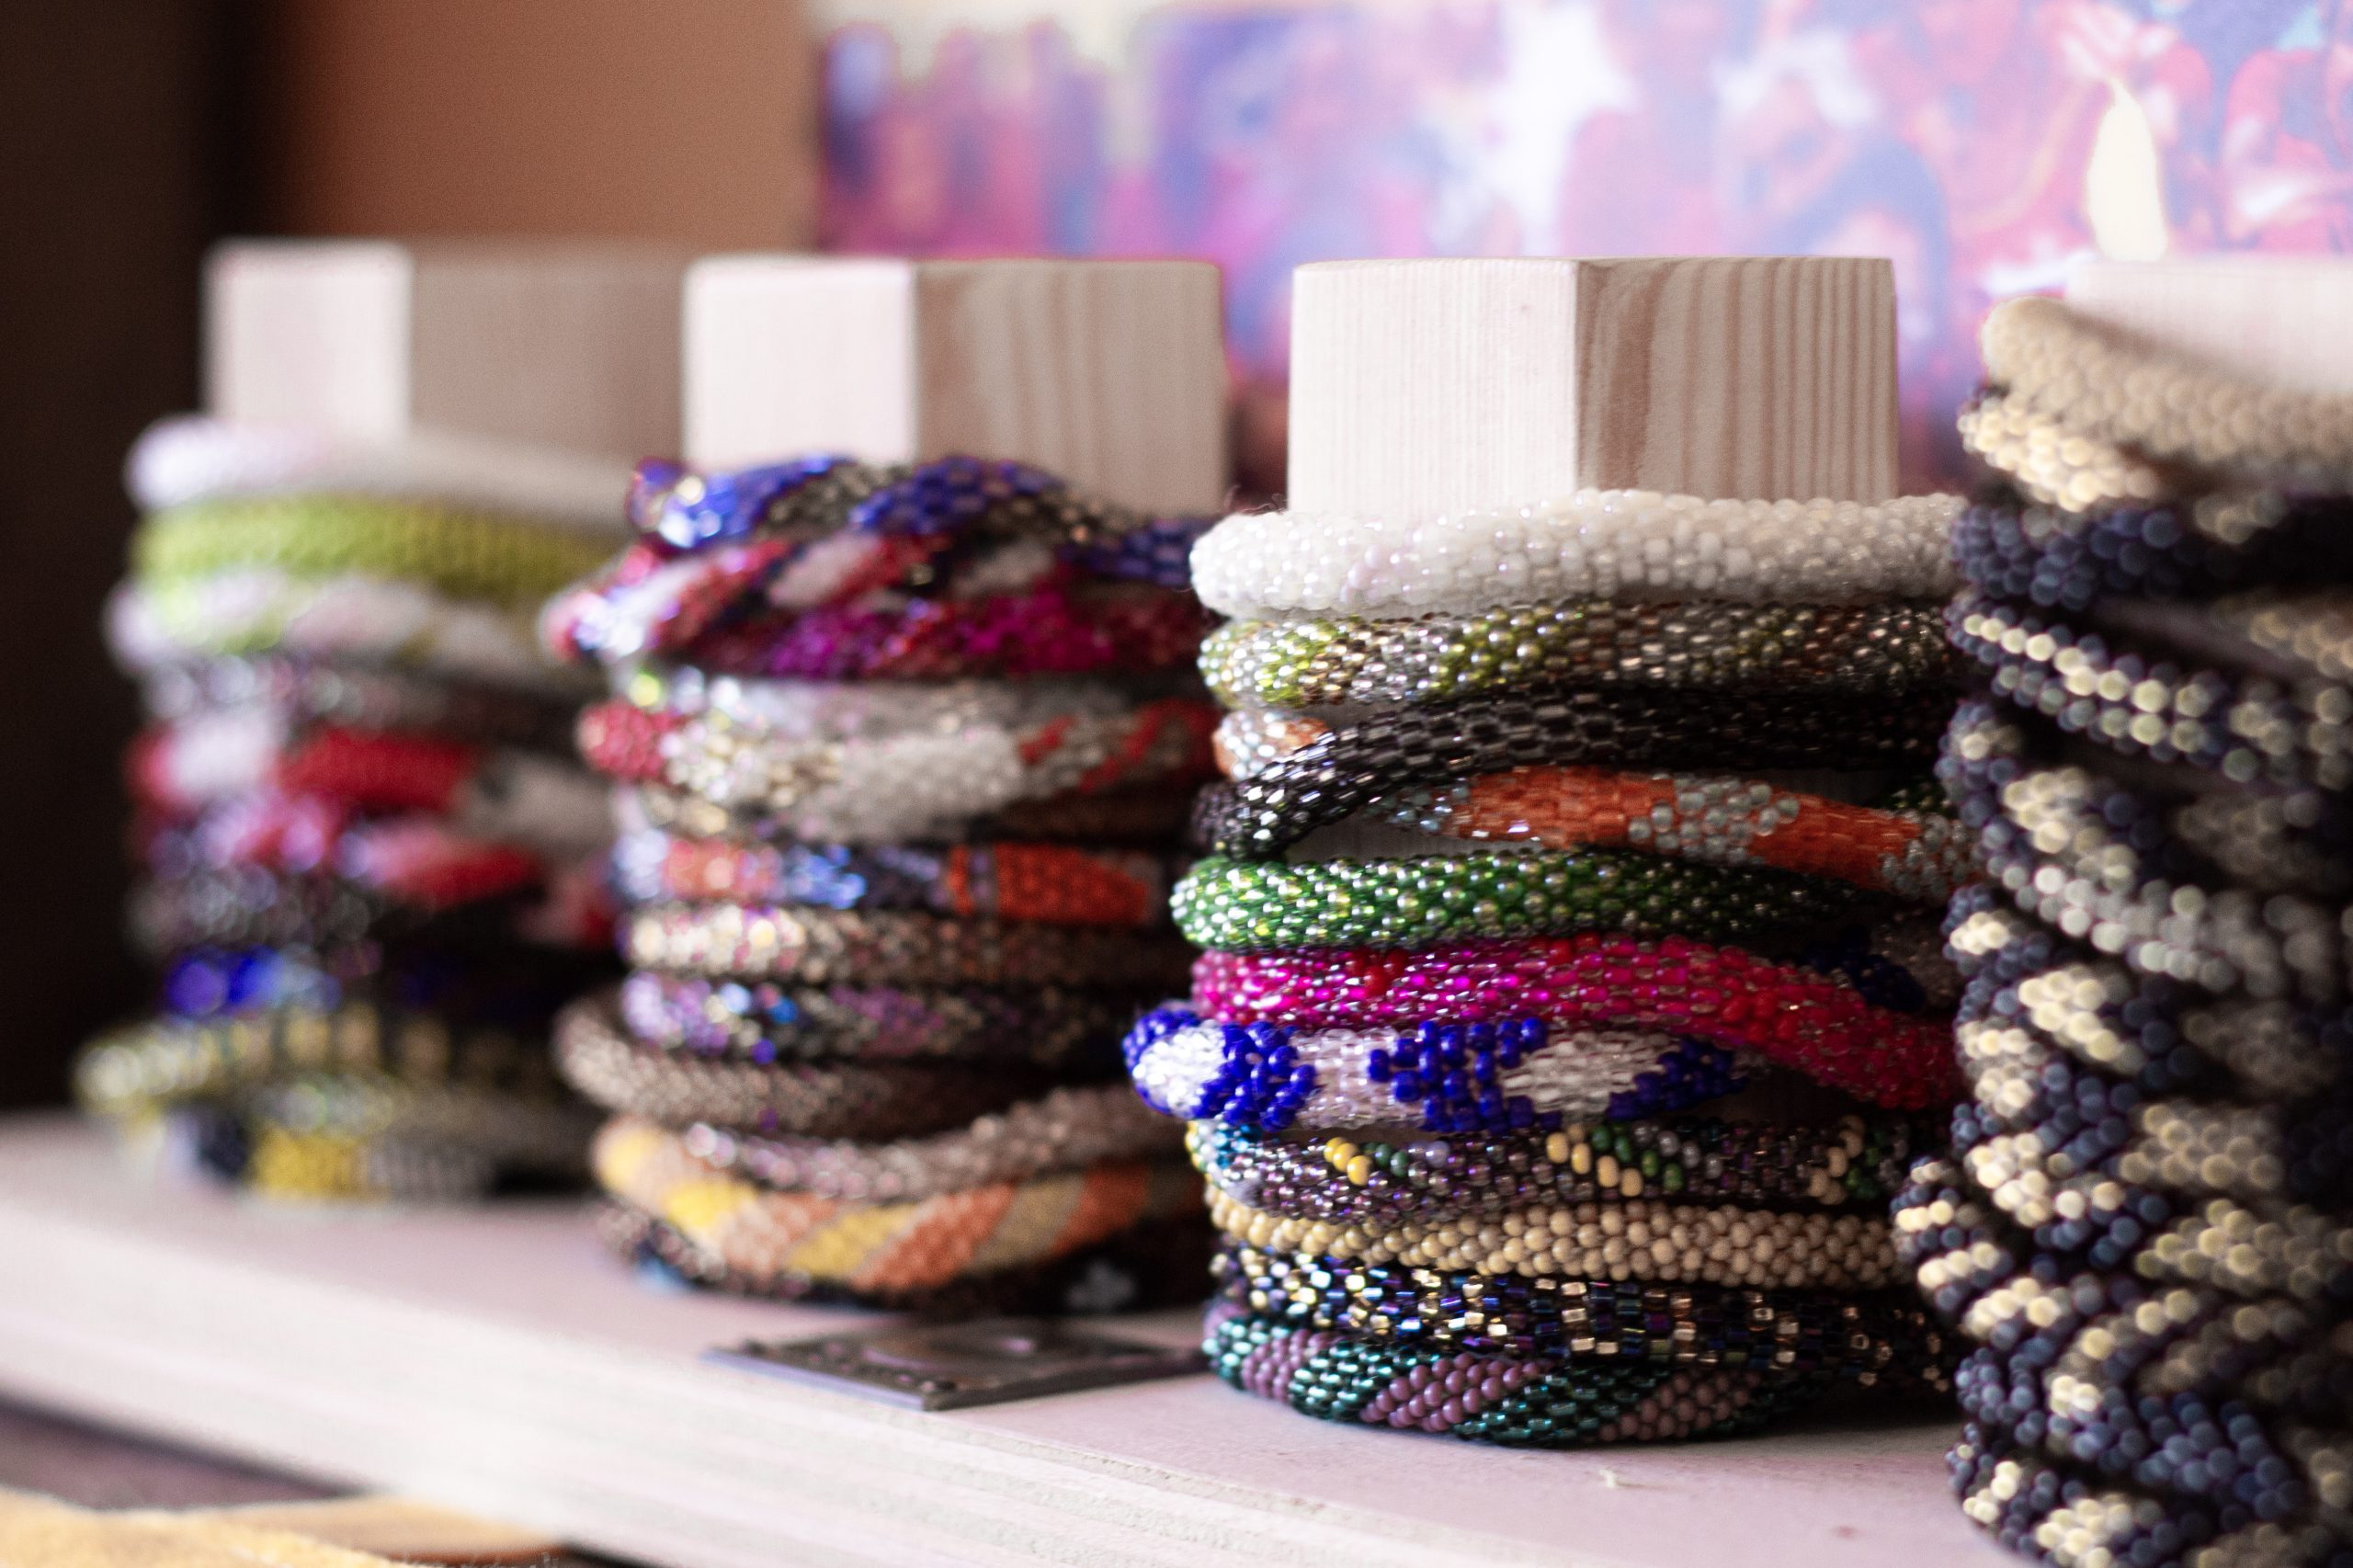 Stacks of handmade bracelets made by women in Nepal.